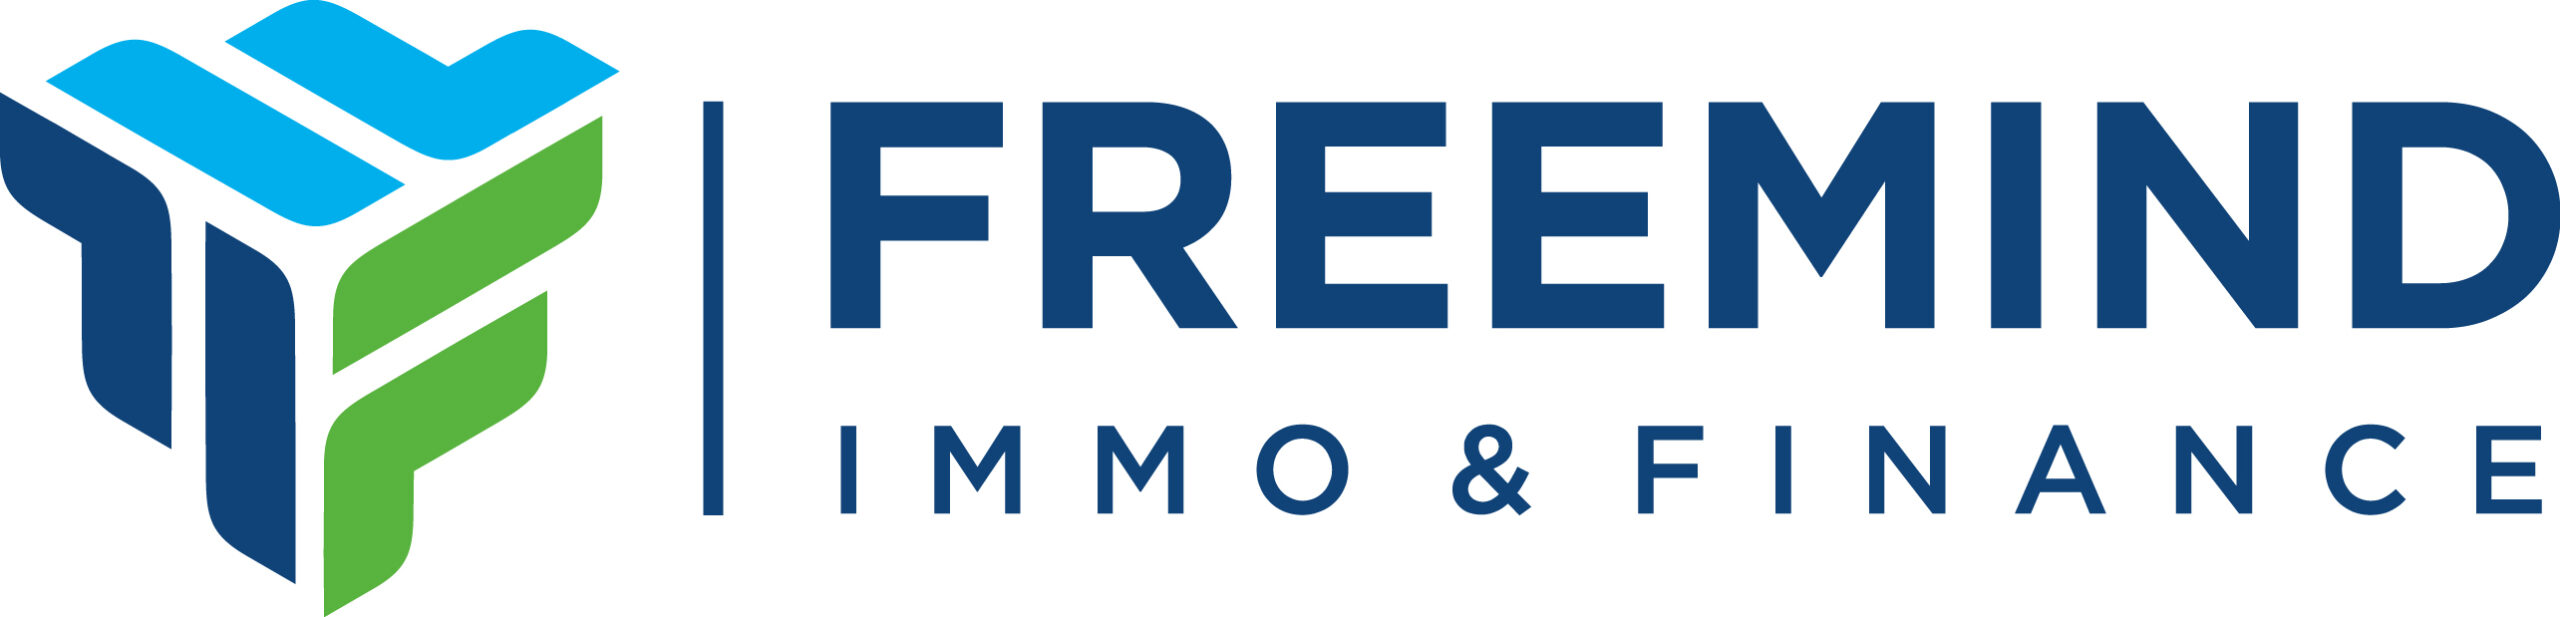 freemind Immo & Finance